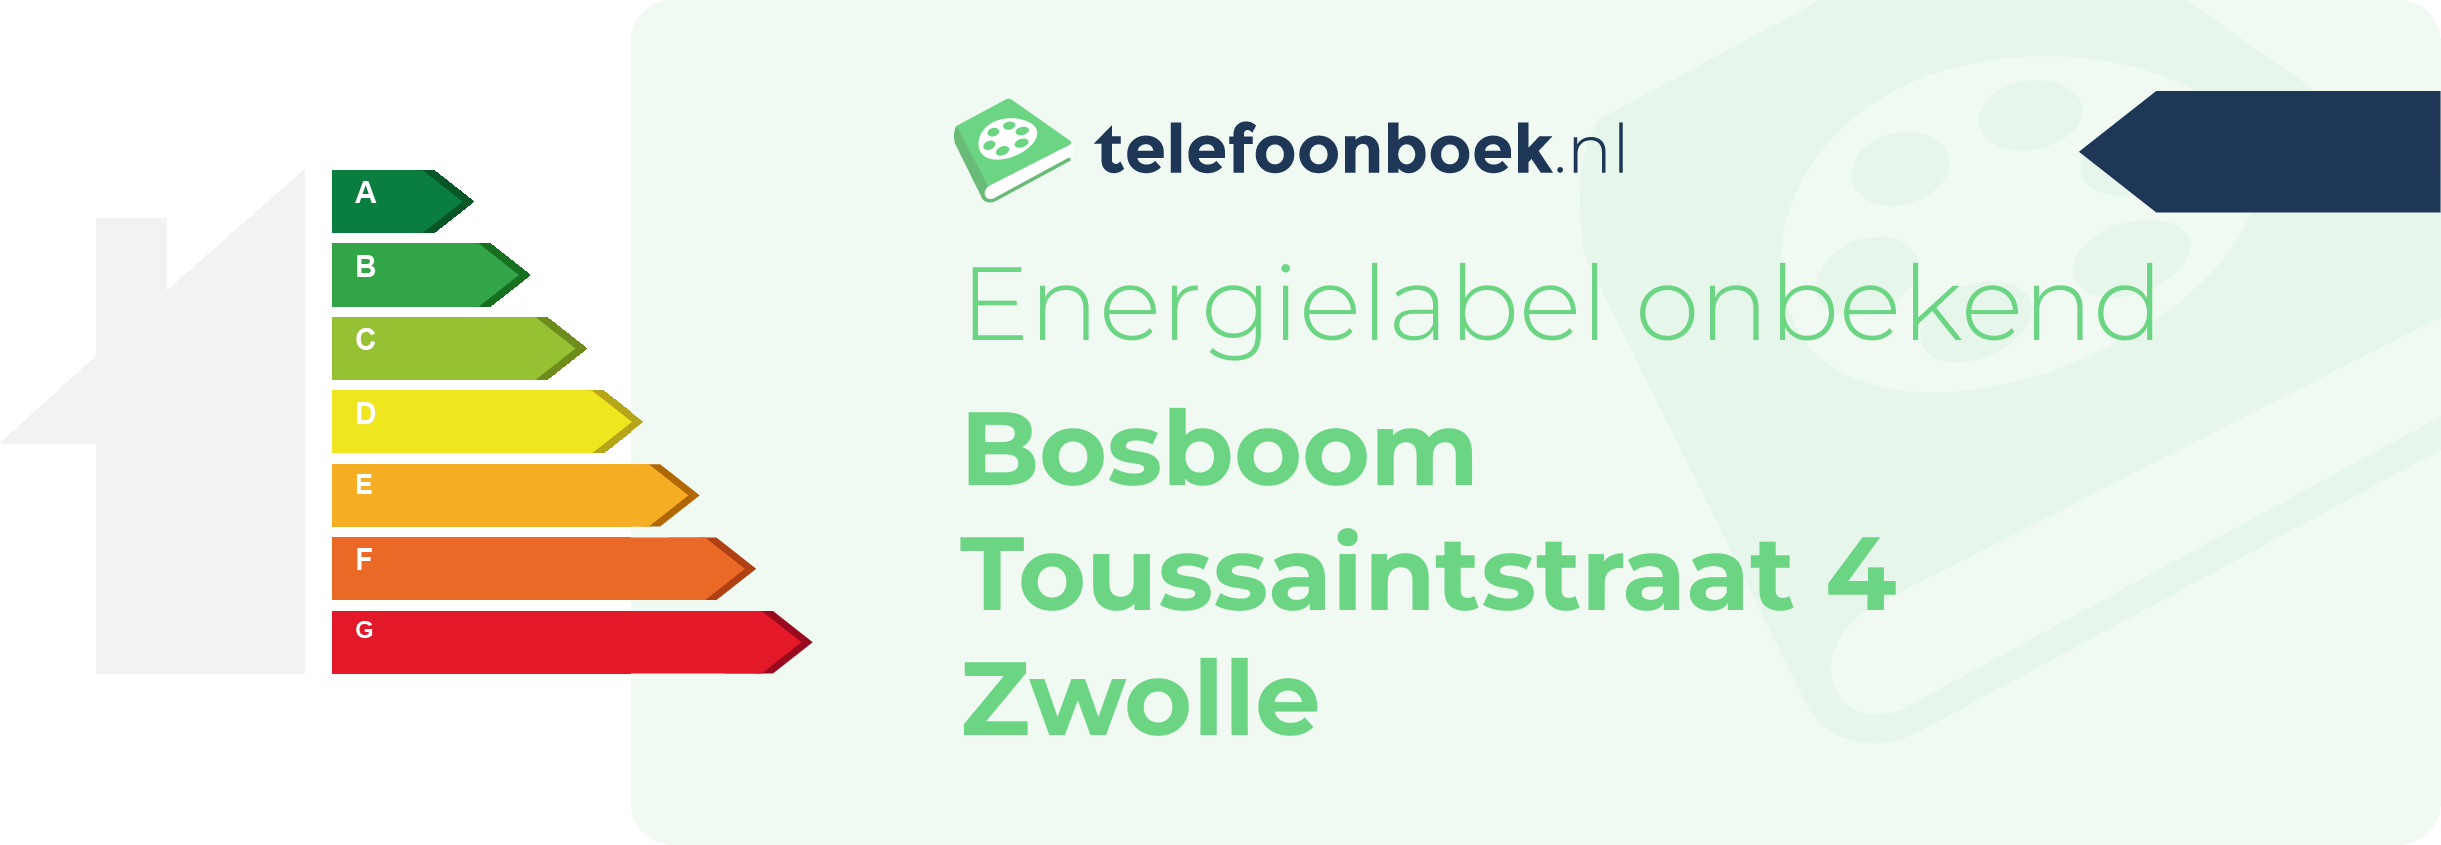 Energielabel Bosboom Toussaintstraat 4 Zwolle